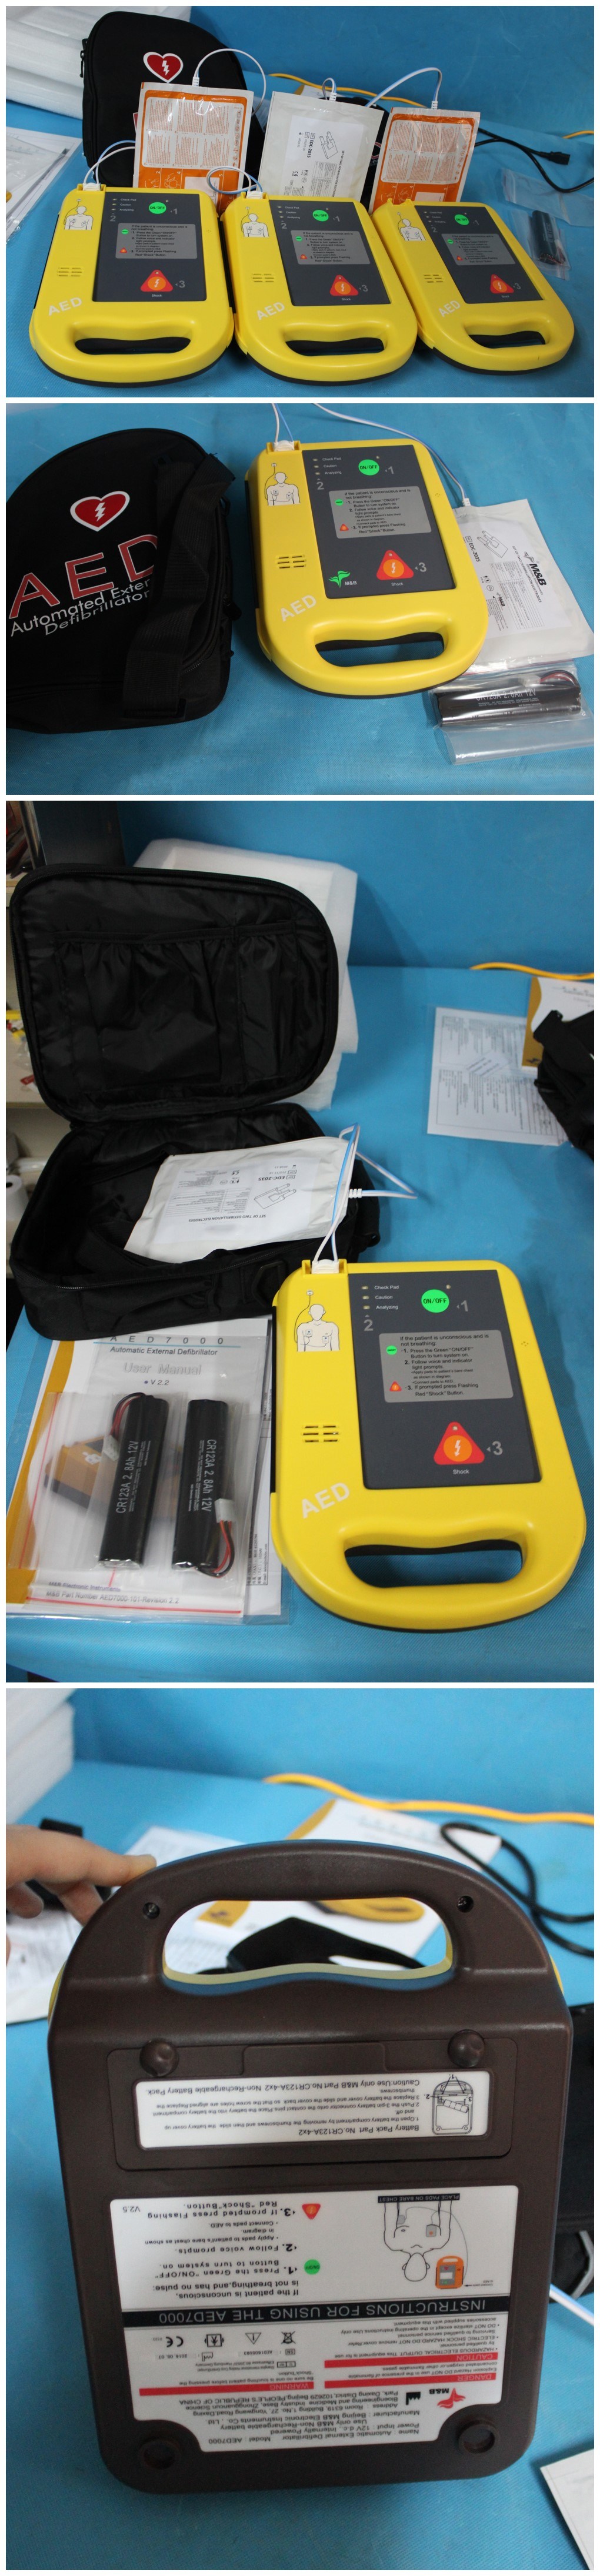 Manual Biphasic Cardiac Defibrillator Monitor